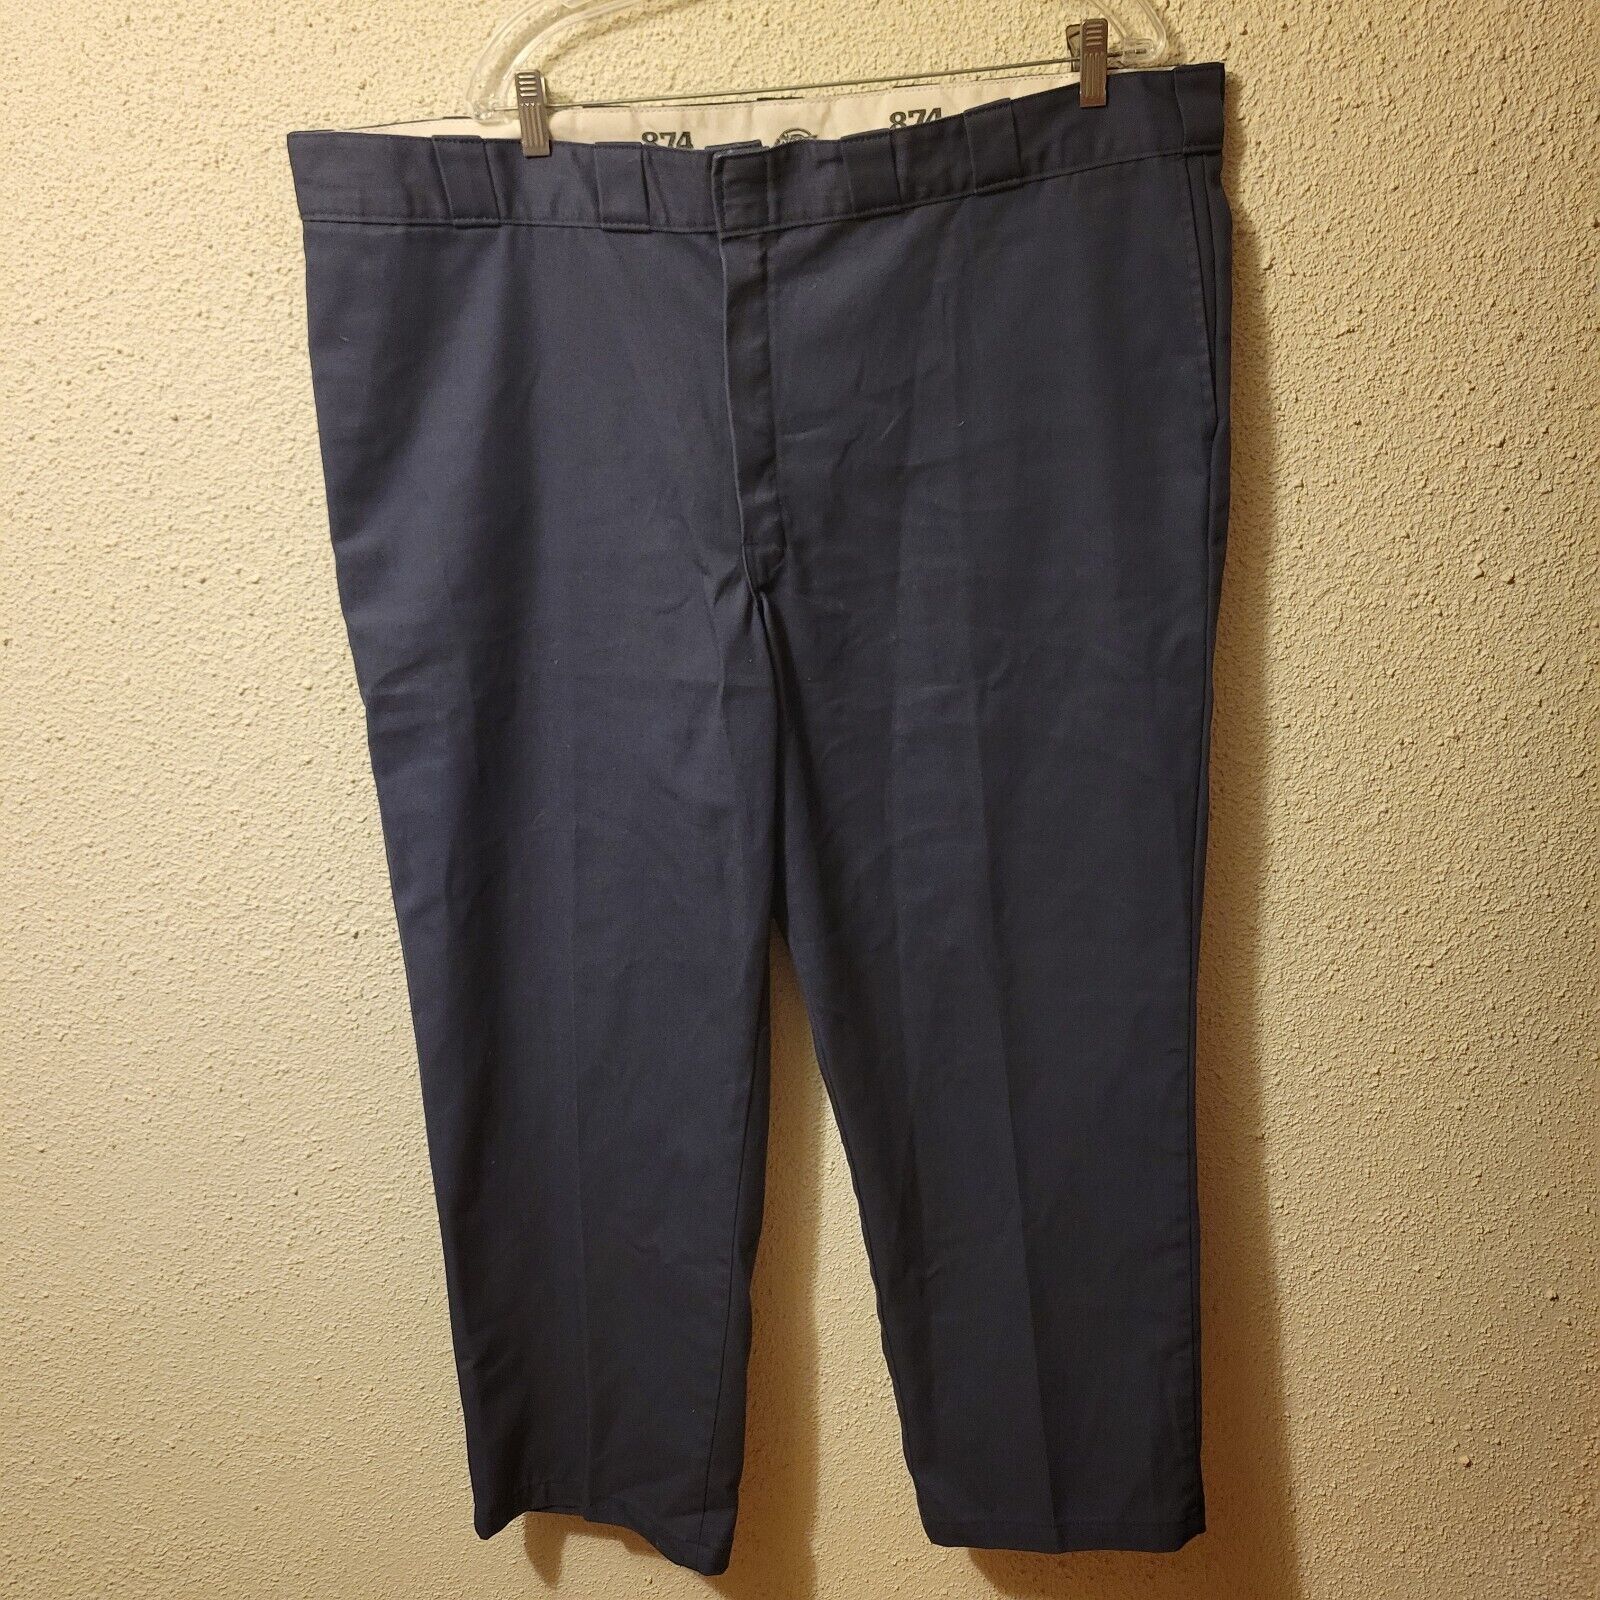 Dickies Navy Blue 874 Original Fit Flex Work Pants Men’s Size 46x30 - Pants